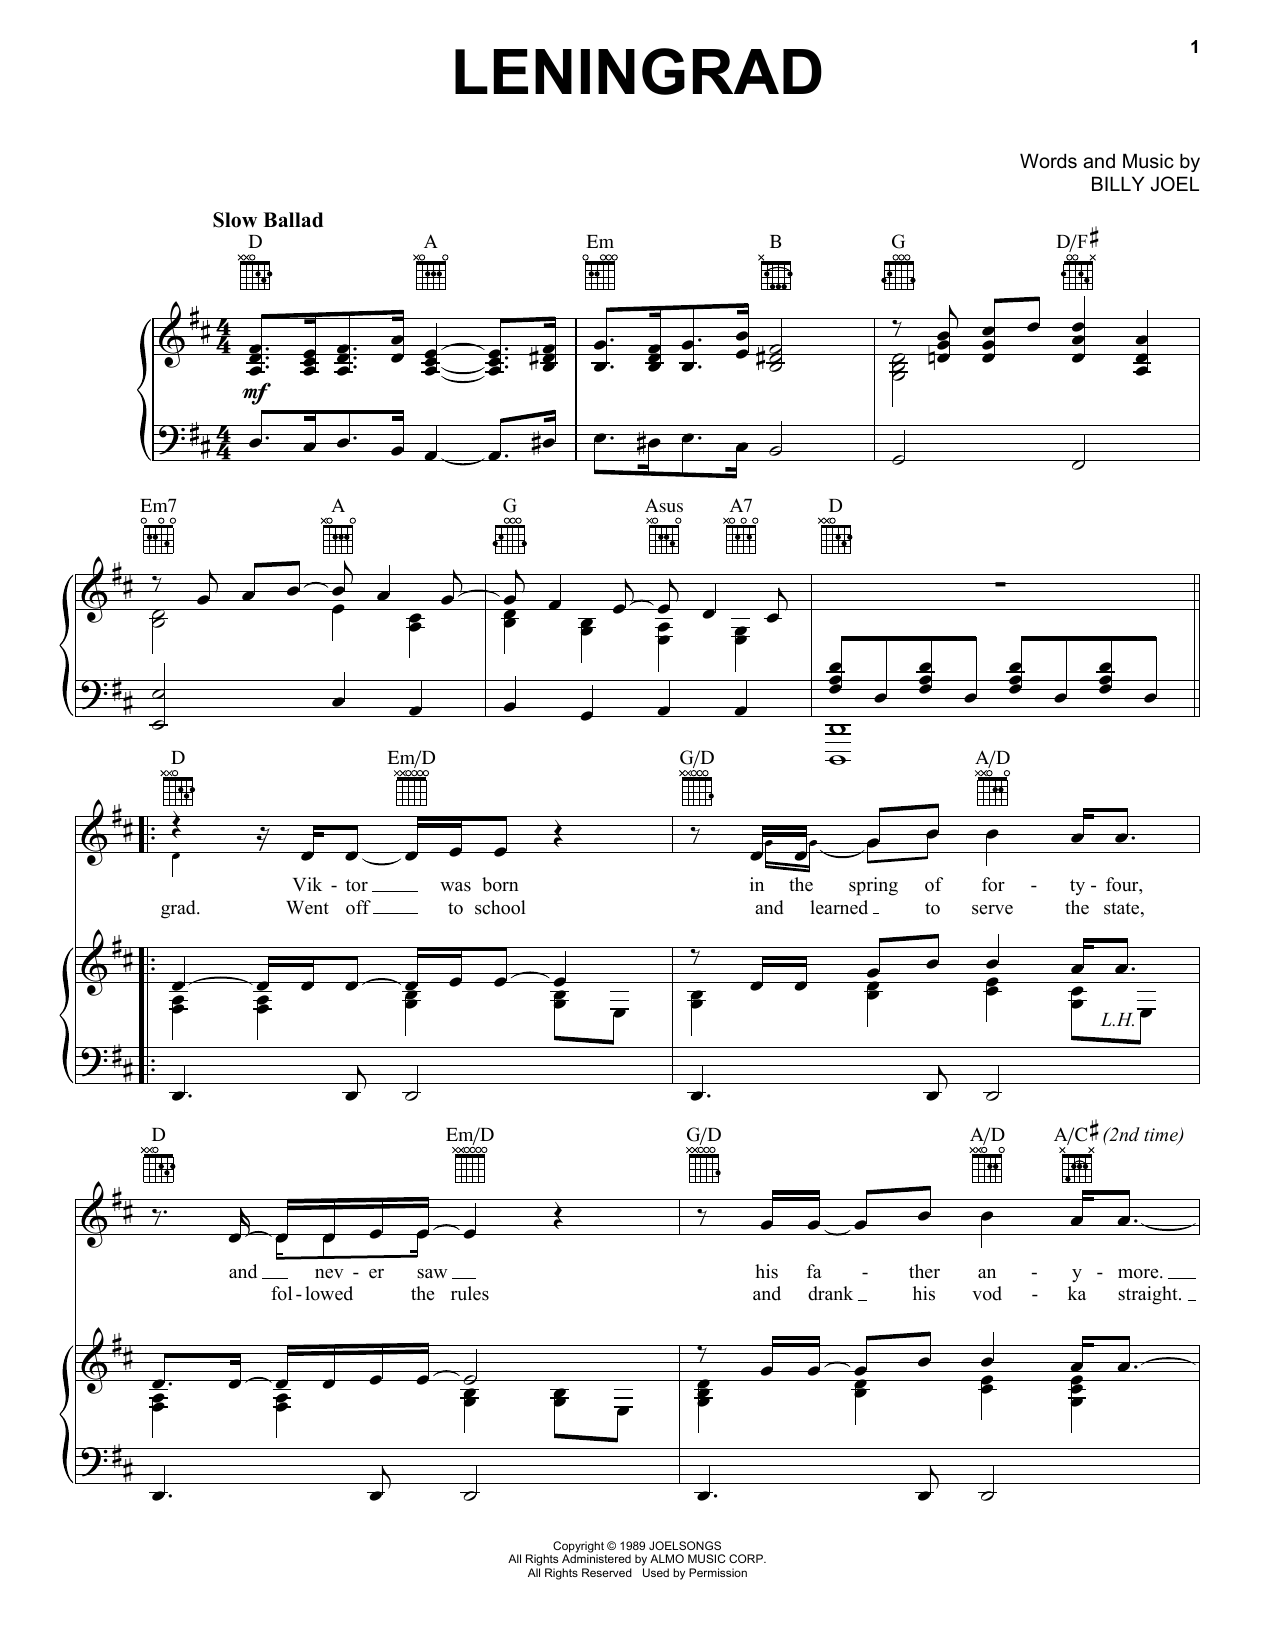 Billy Joel Leningrad Sheet Music Notes & Chords for Lyrics & Piano Chords - Download or Print PDF